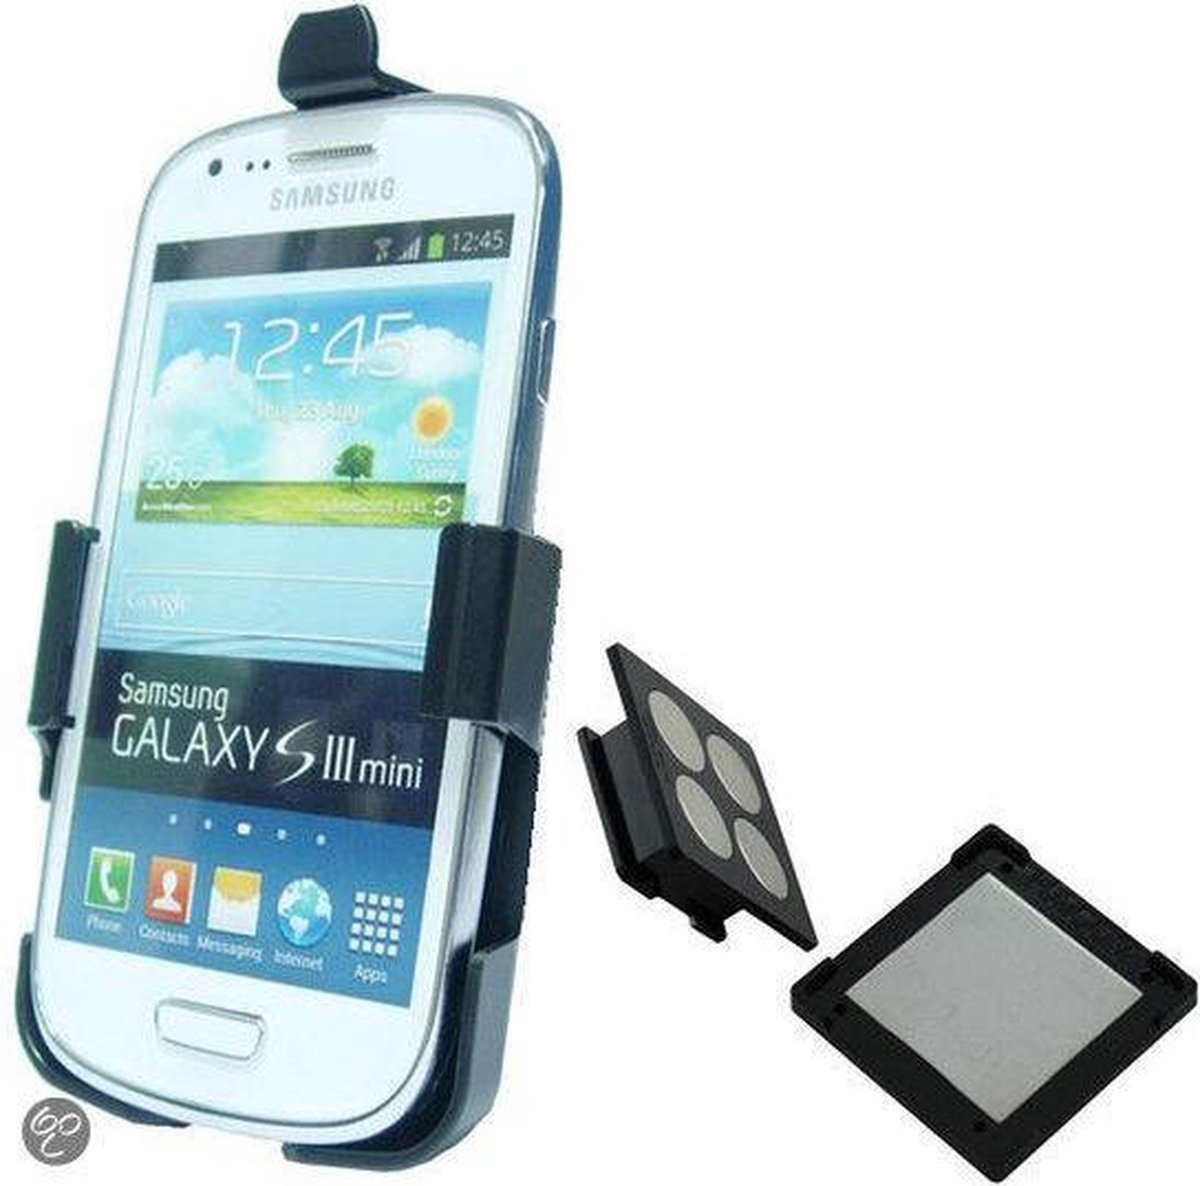 Haicom Magenetic Houder voor de Samsung Galaxy S3 mini (i8190) (MI-235)